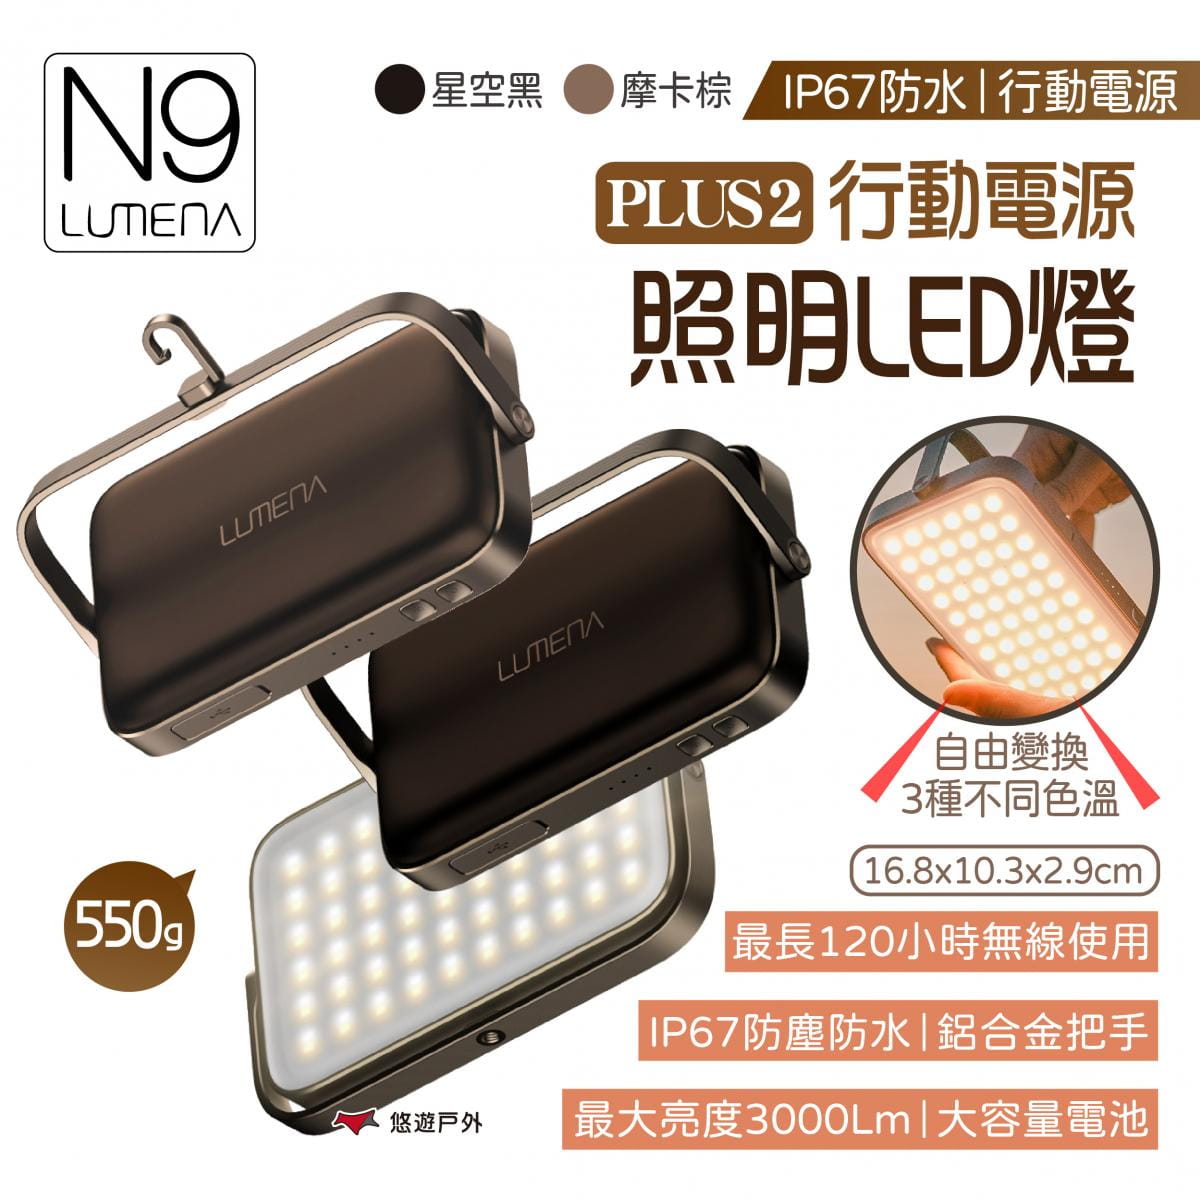 【N9 LUMENA】PLUS2 行動電源照明LED燈 (悠遊戶外) 0